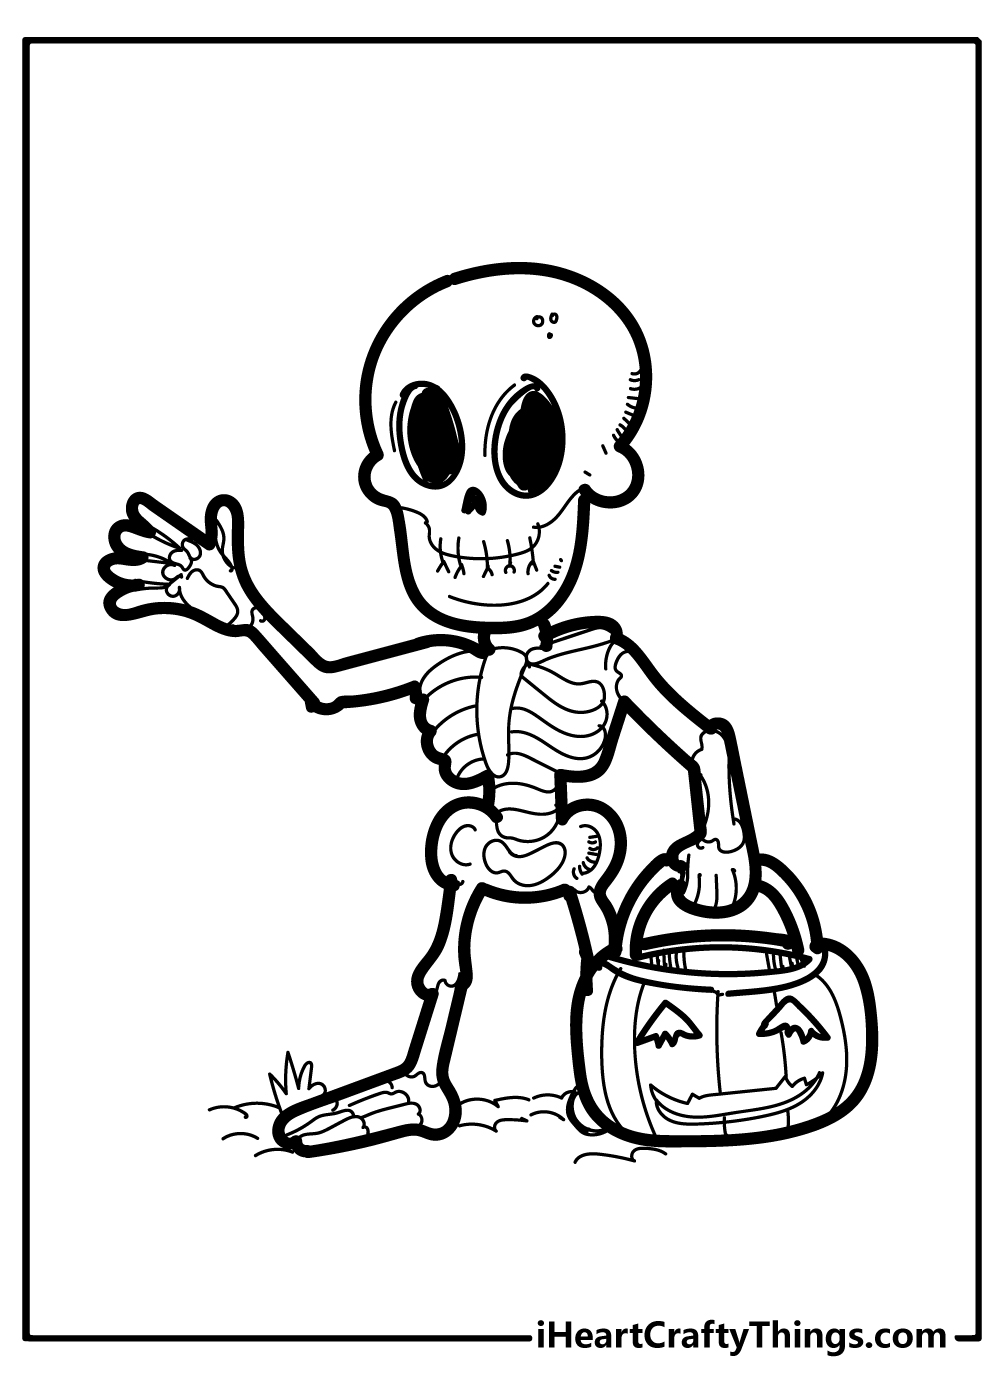 Skeleton Coloring Pages free pdf download